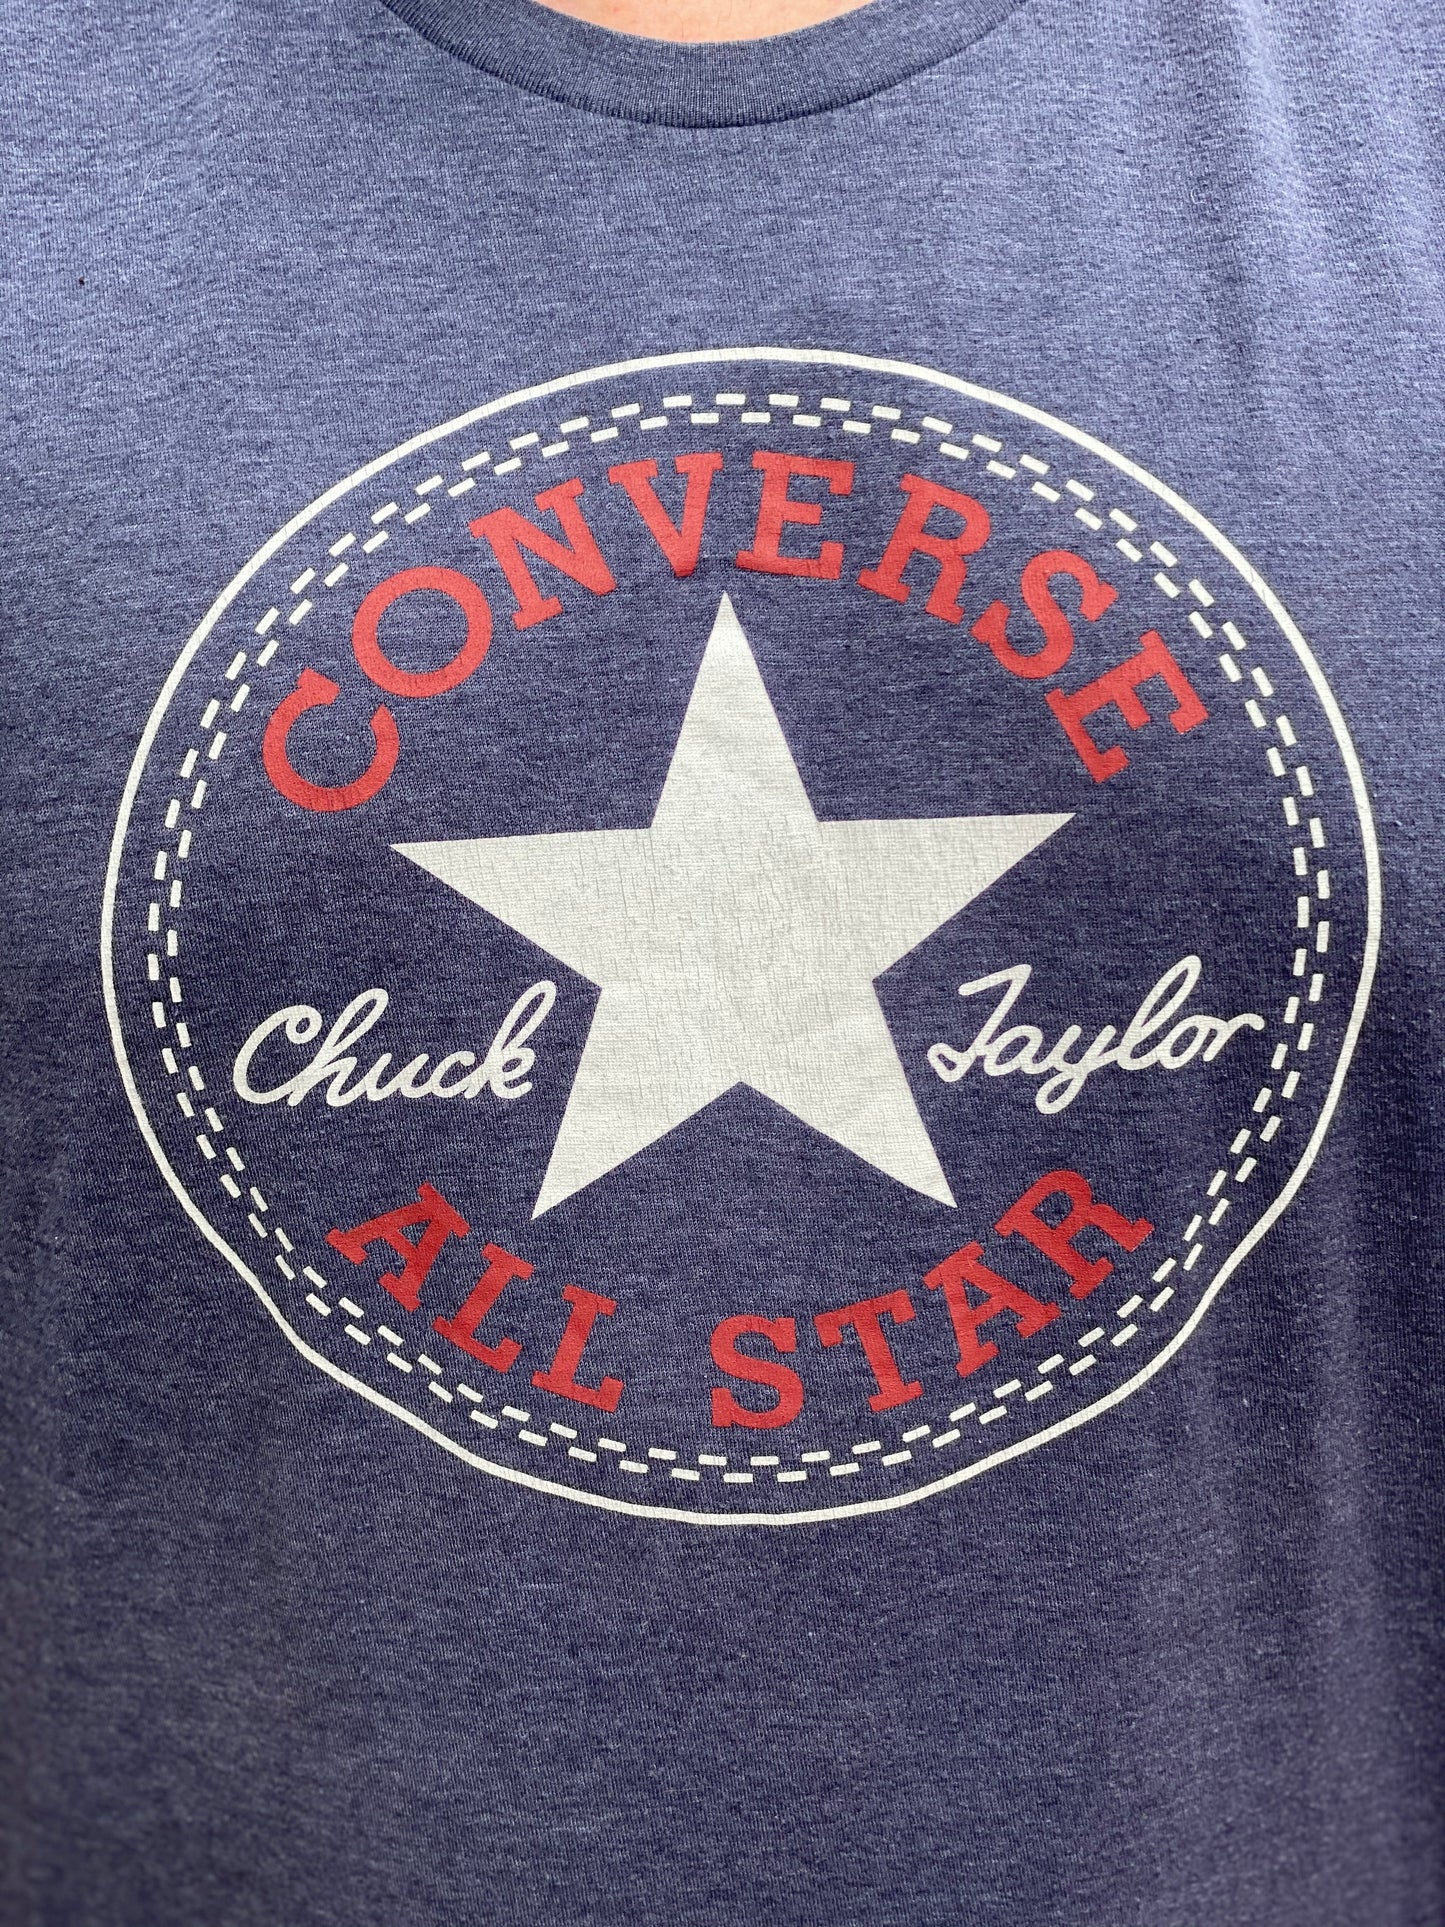 Converse (Retro T-Shirt)